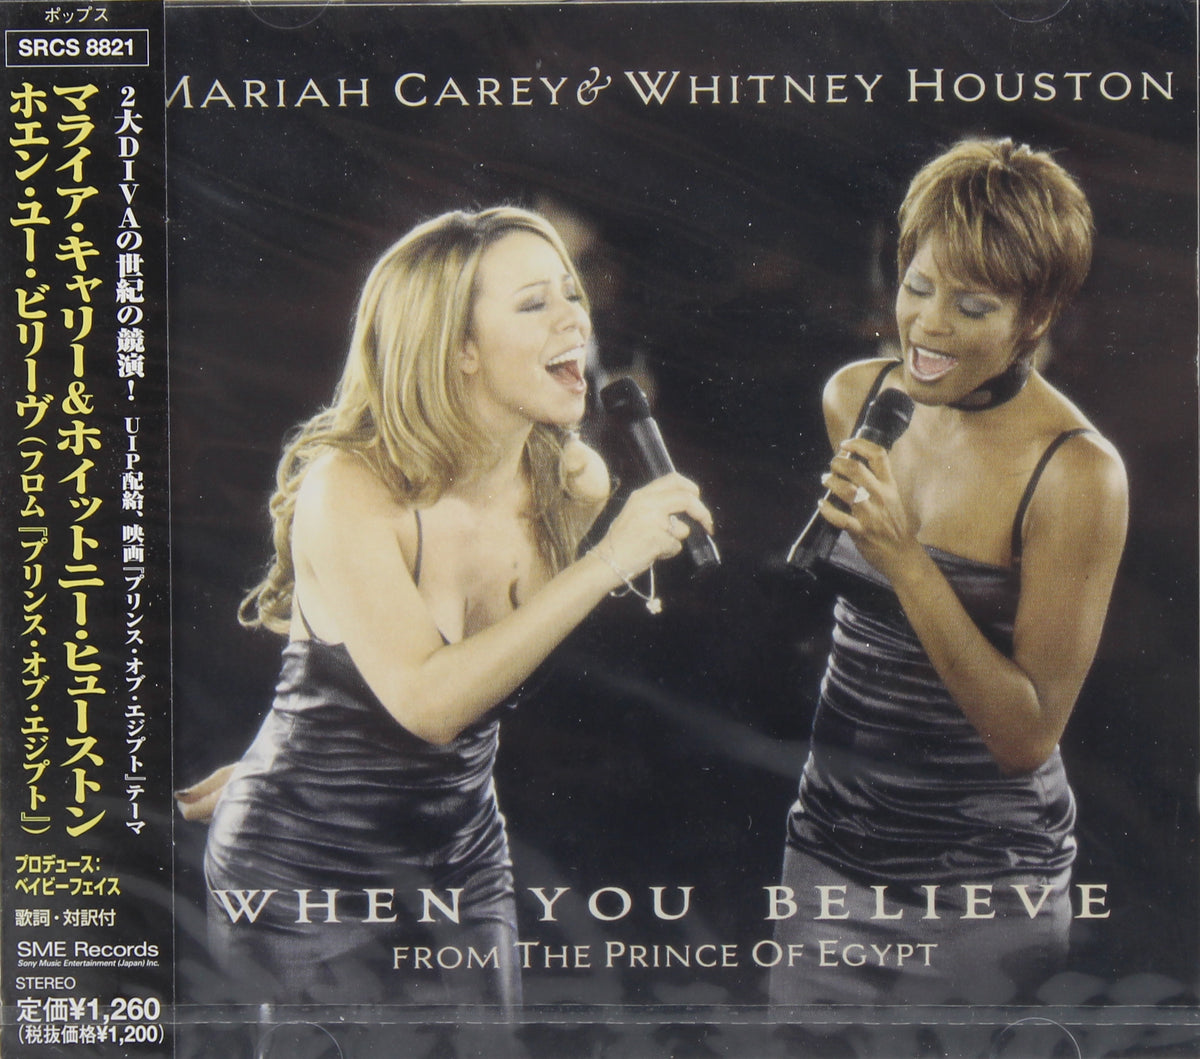 Mariah Carey, Whitney Houston - When You Believe, CD Single, Japan 1998